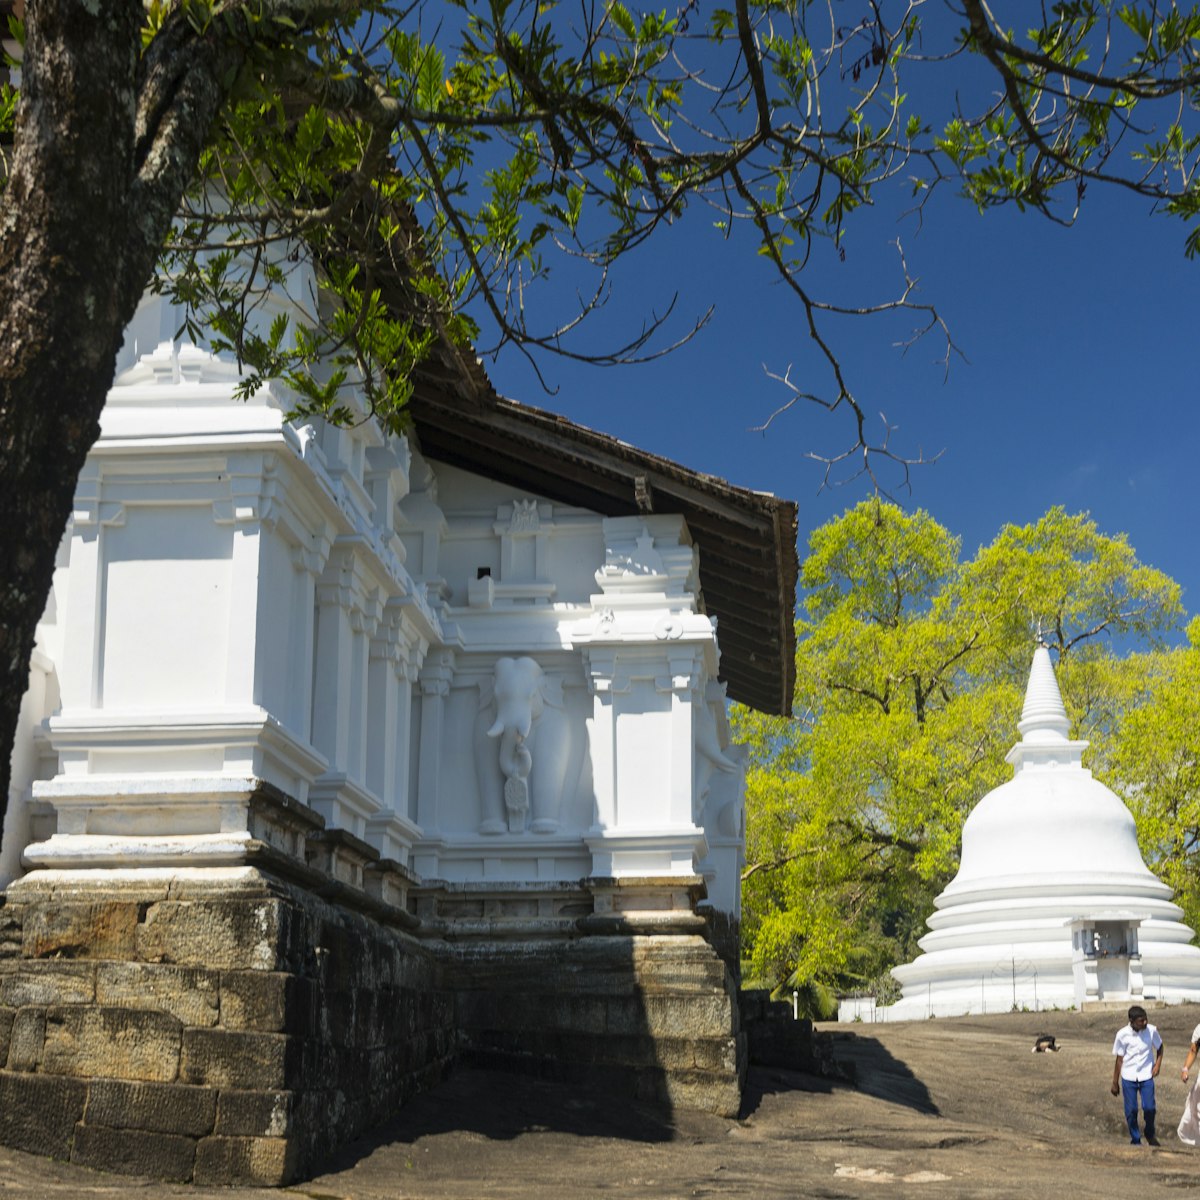 Lankatilaka Temple near Kandy, Sri Lanka